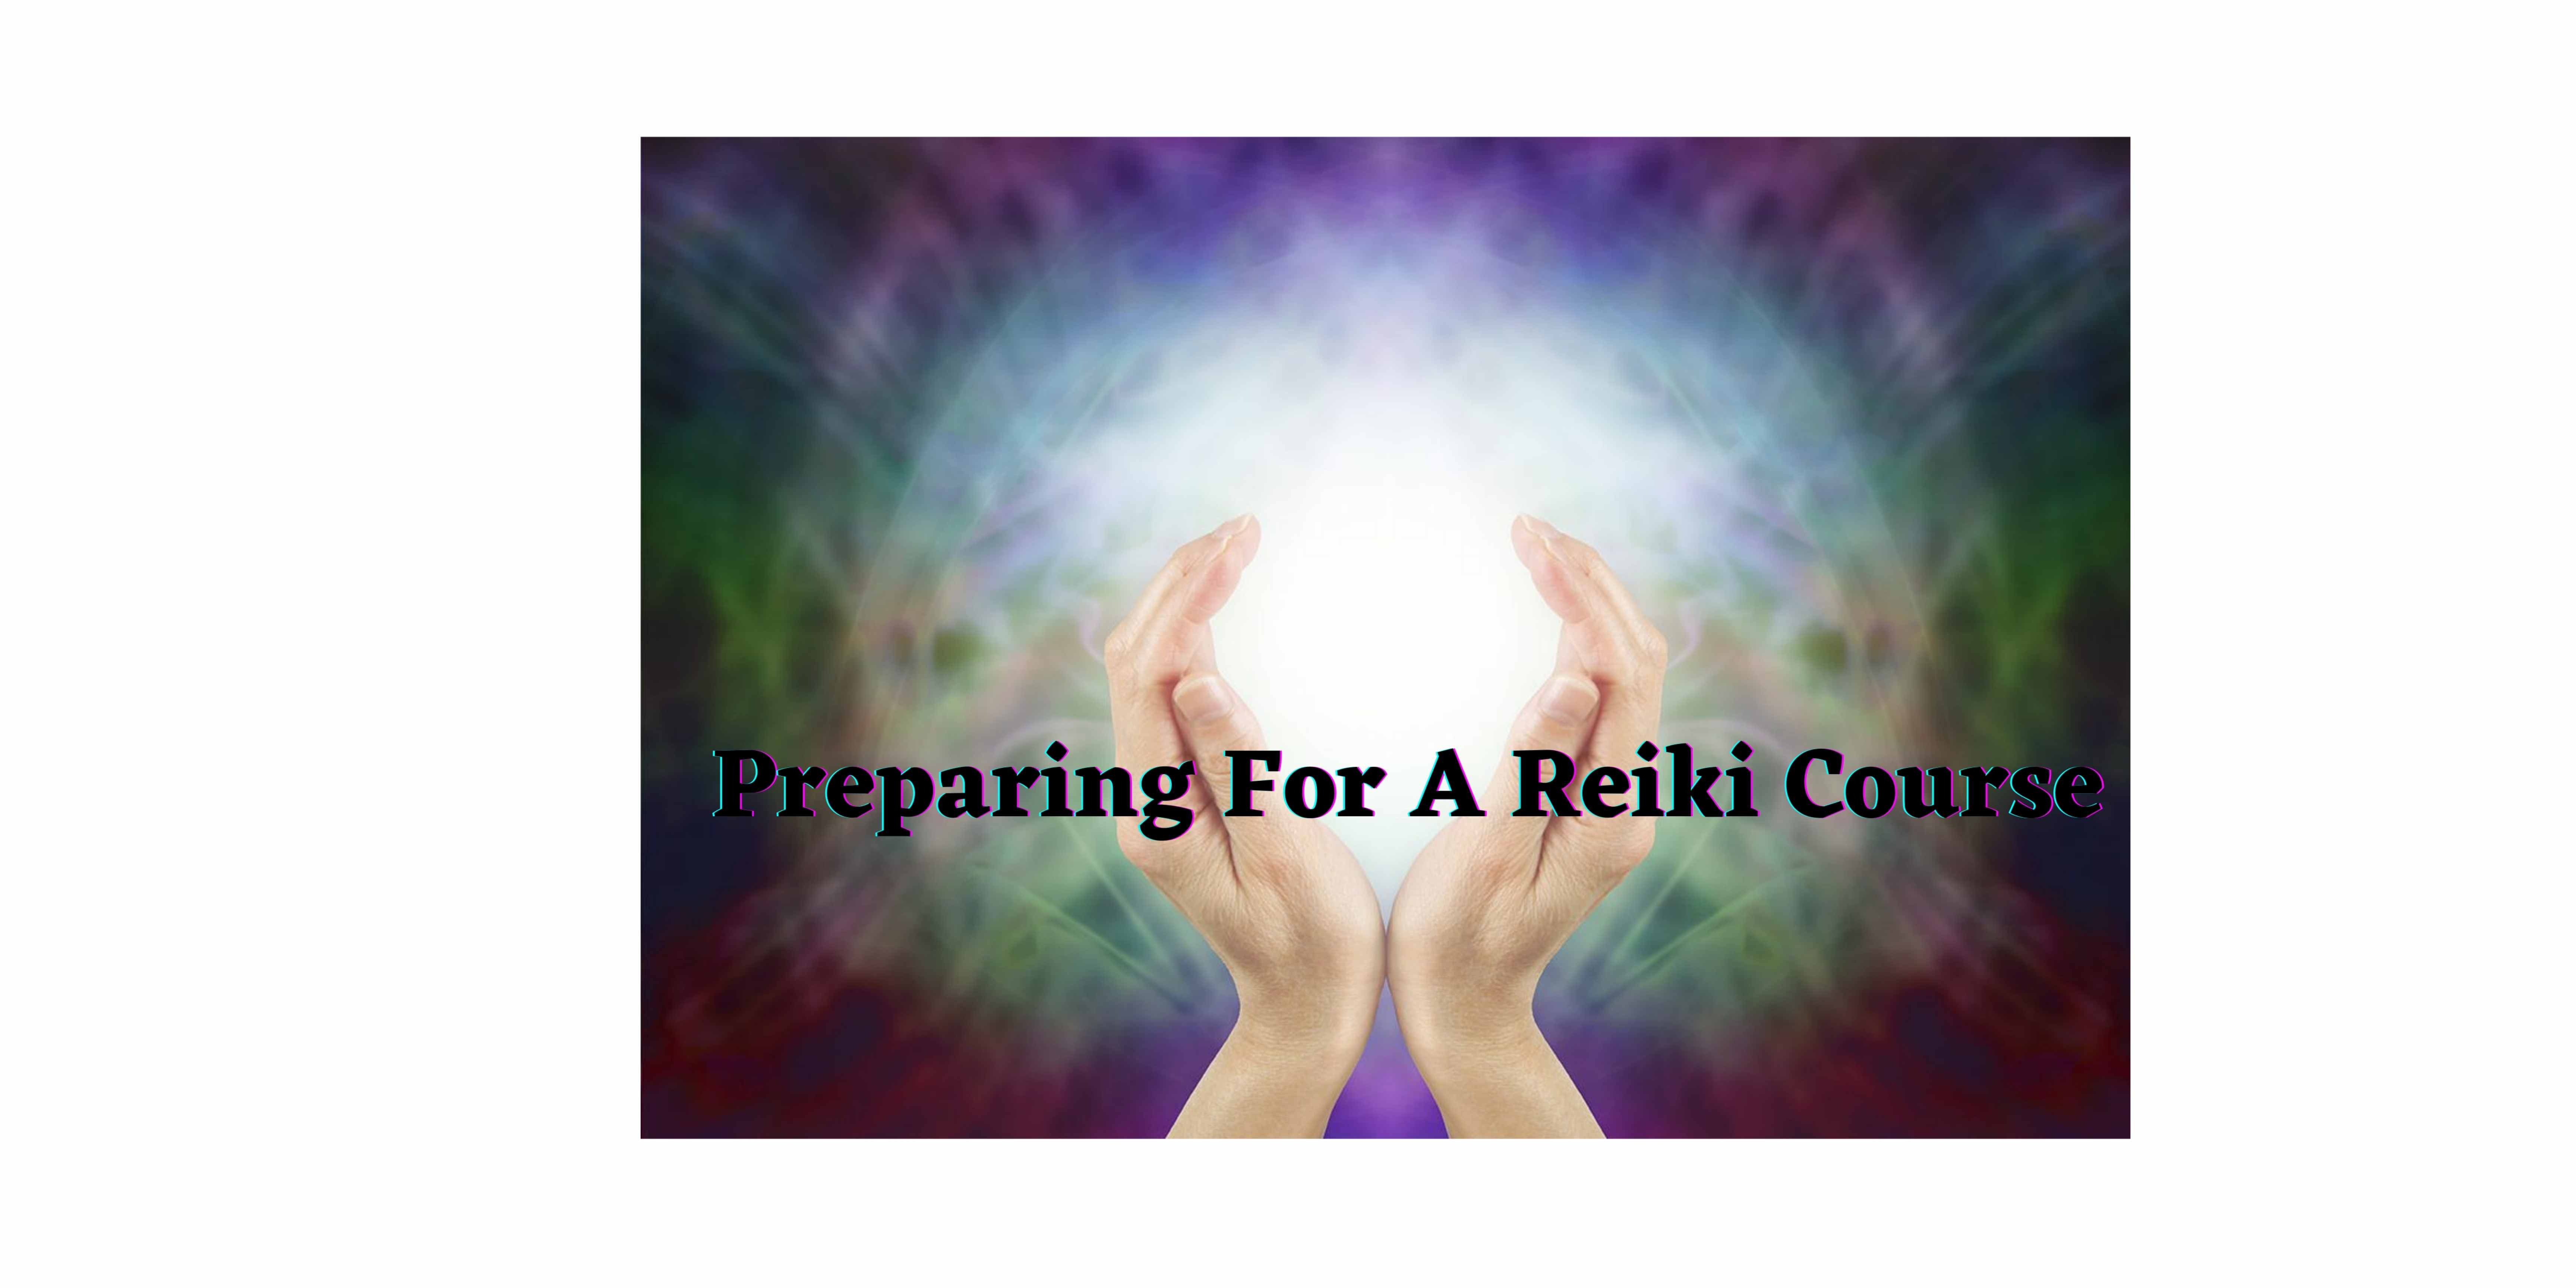 How To Prepare For A Reiki Course?